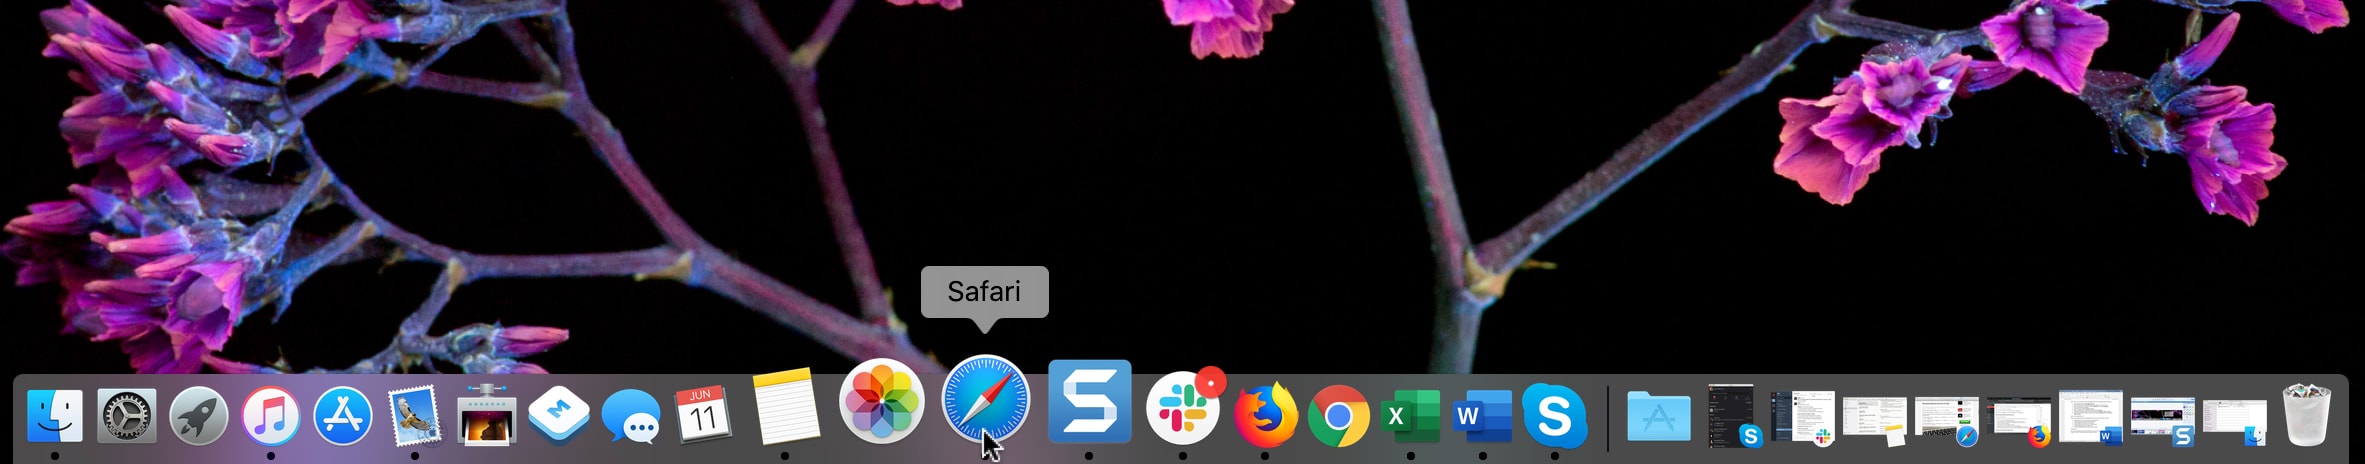 Safari In Dock Magnified Mac